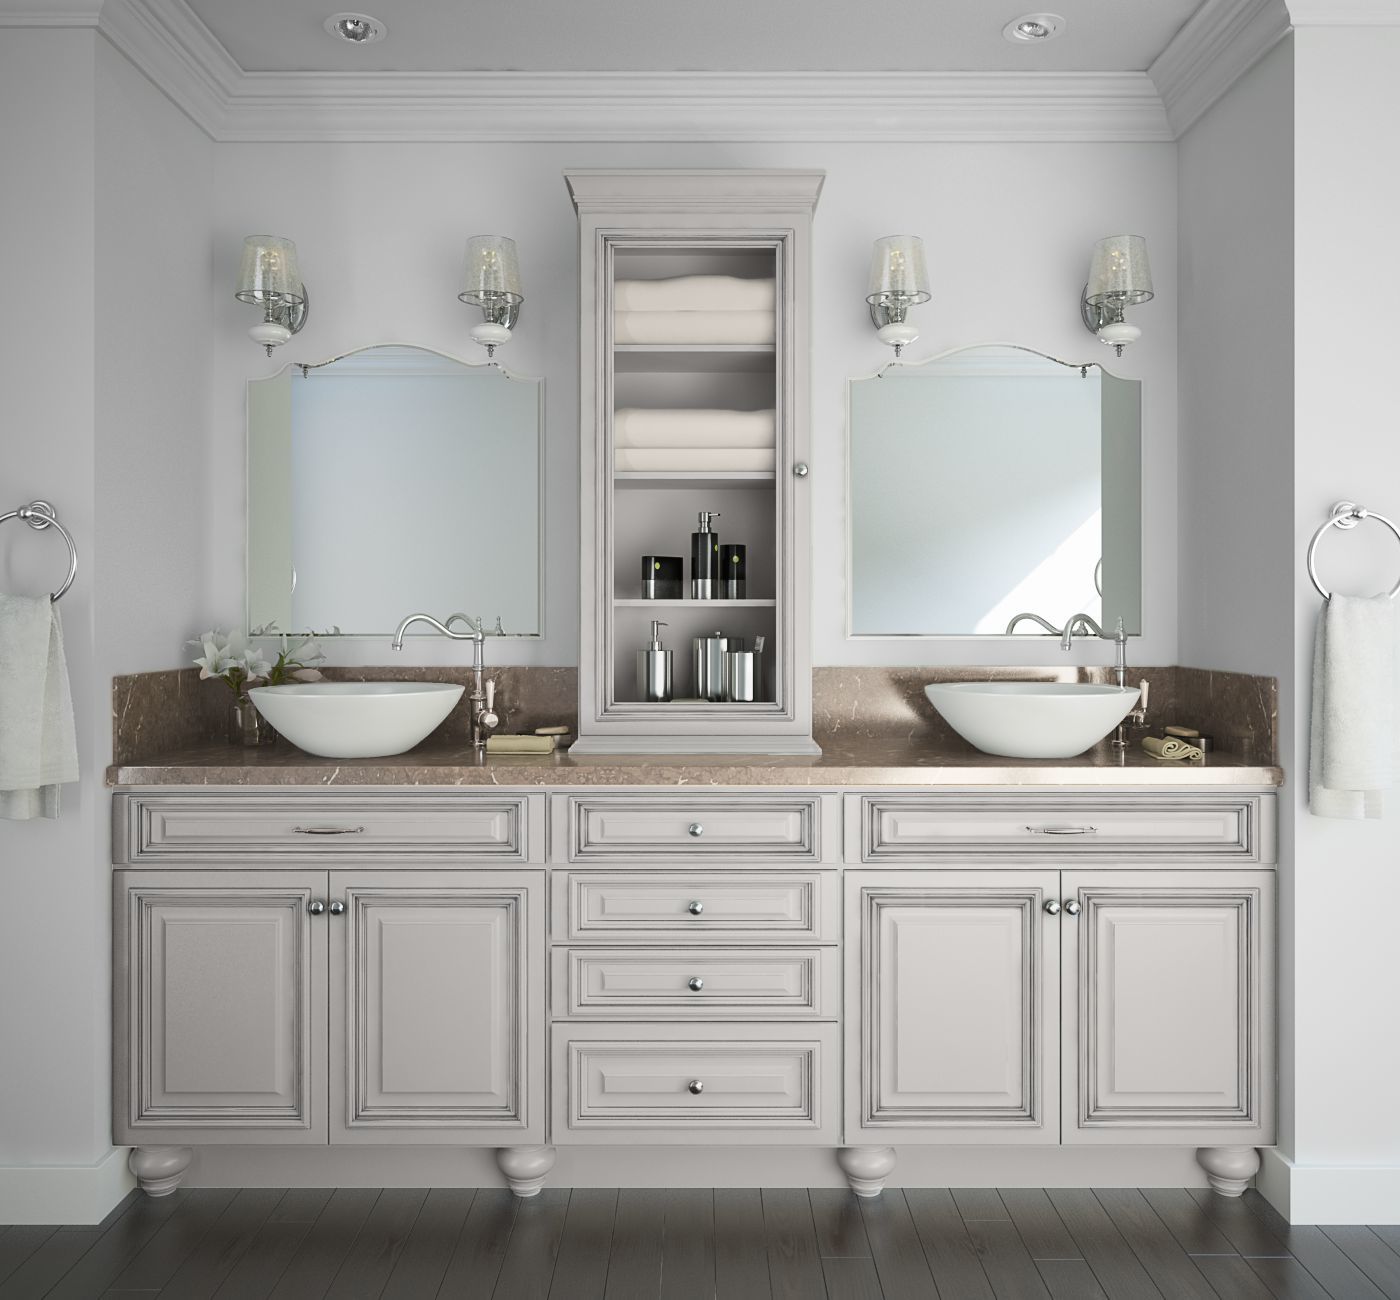 Remodeling Bathroom Cabinets - Double Sink Vanity